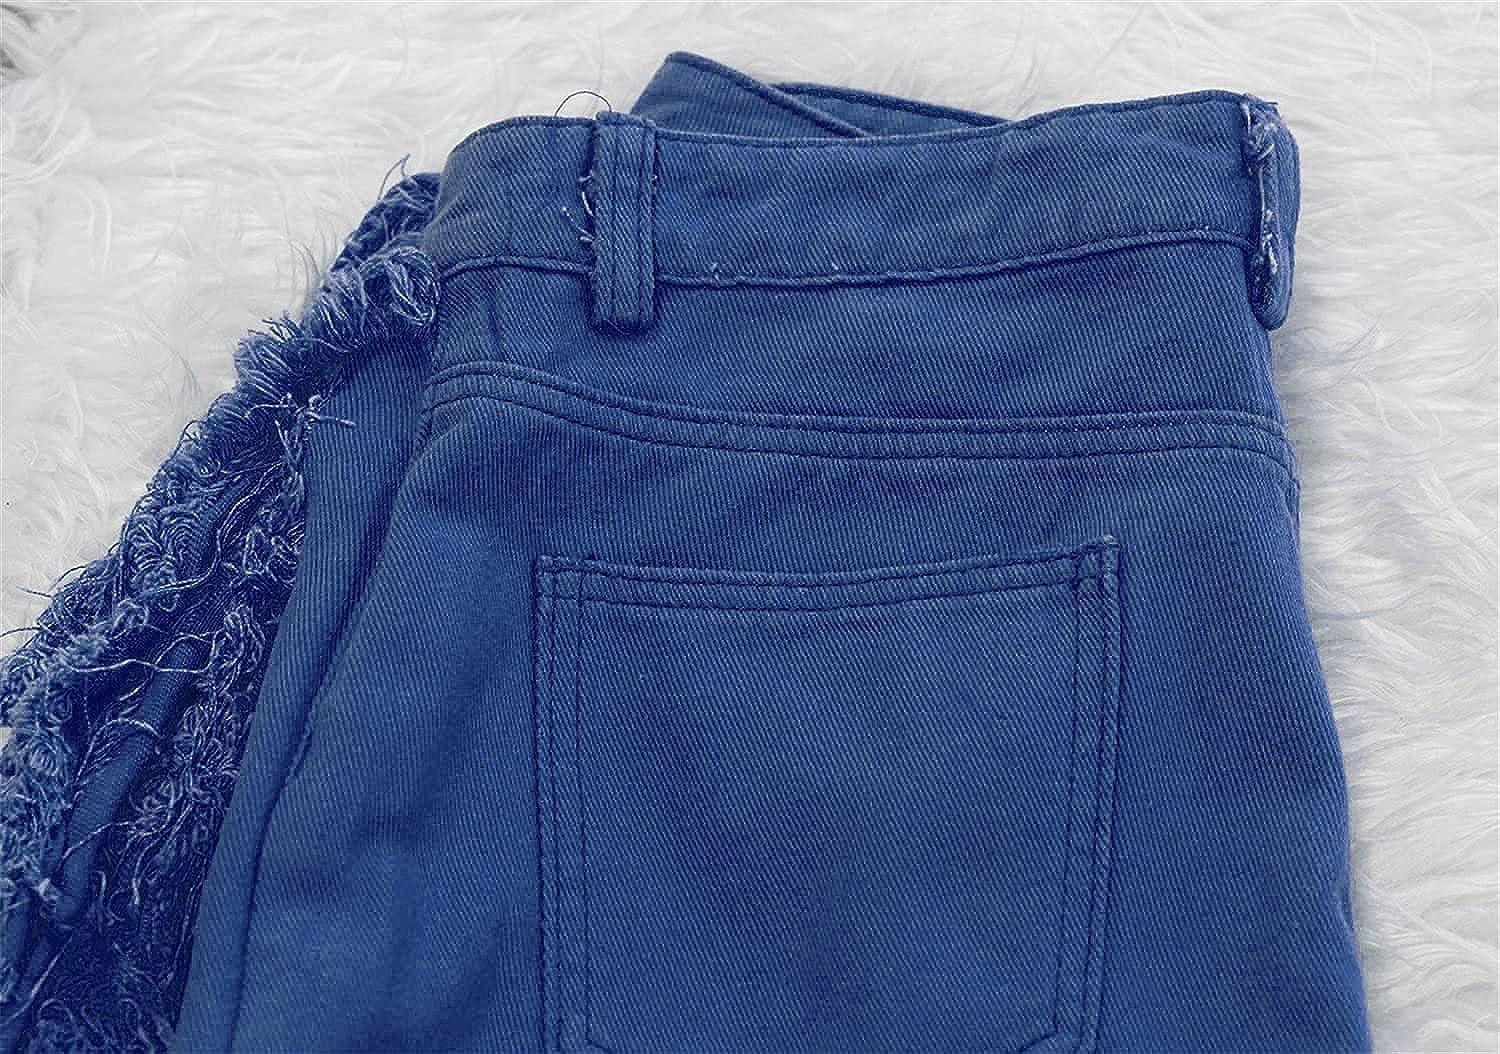 Women's High Rise Ripped Distressed Raw Hem Sexy Denim Jeans